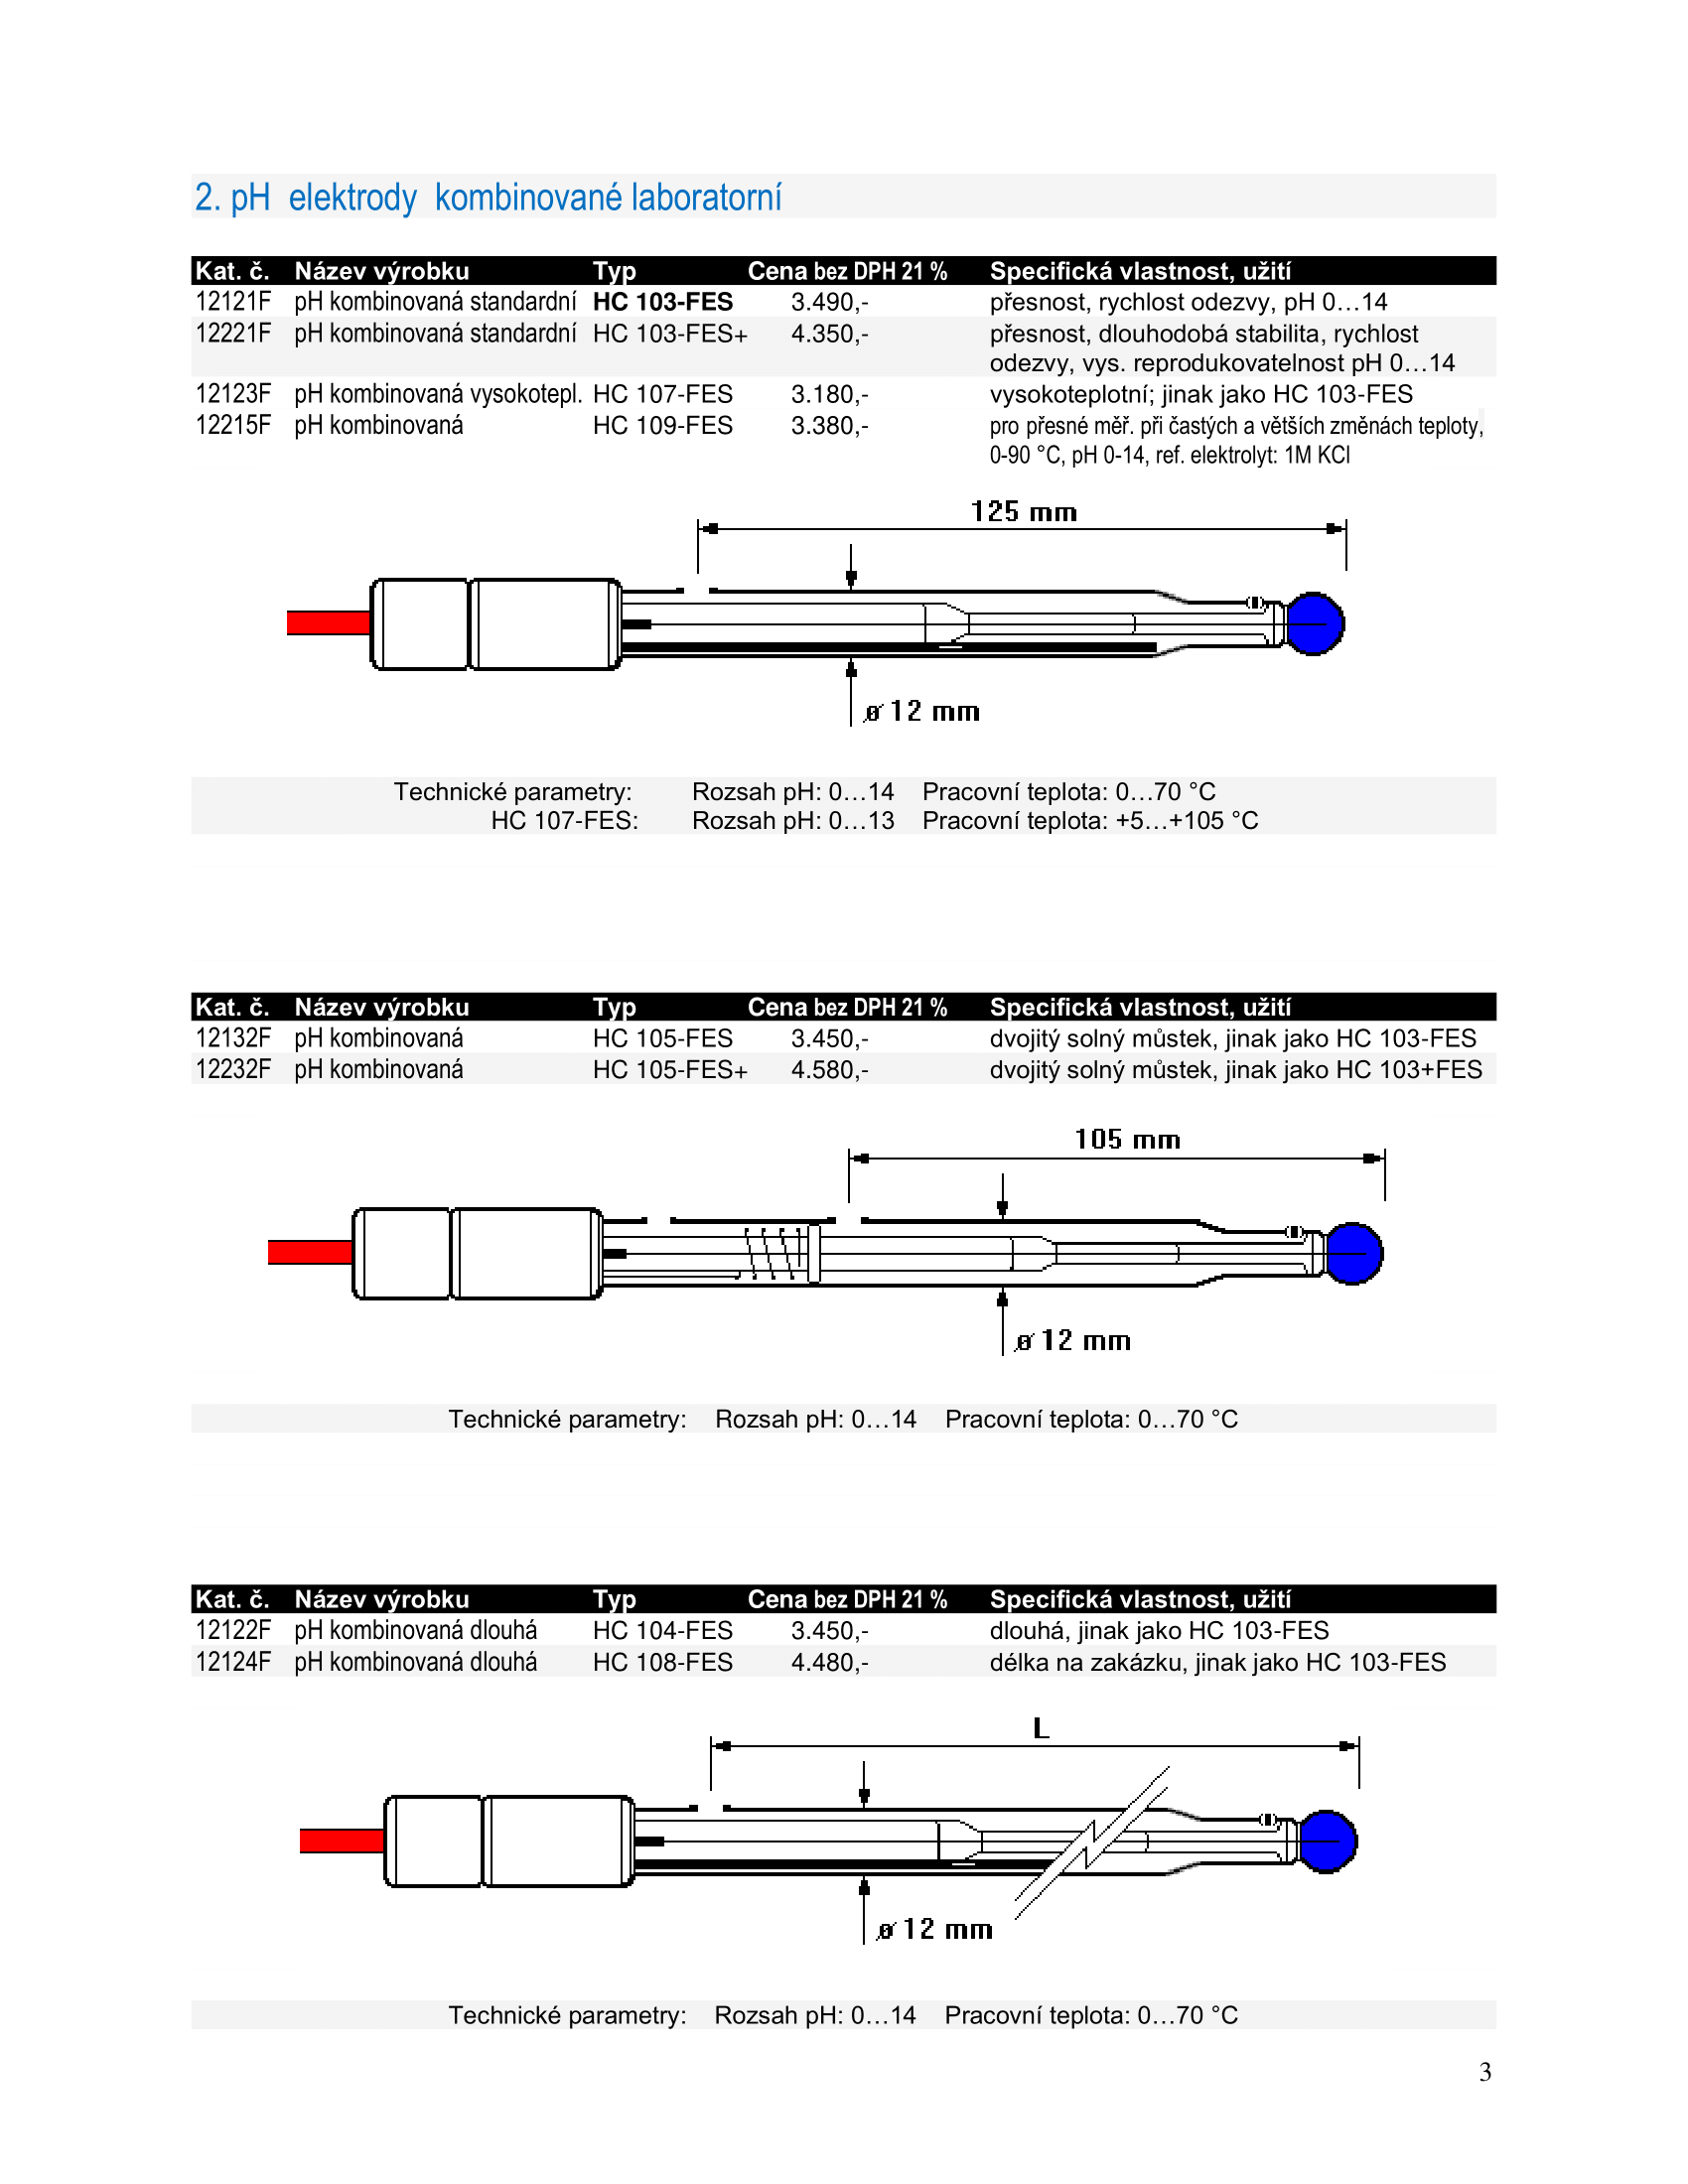 ph-elektrody-laboratorni-fes-2022-3.png